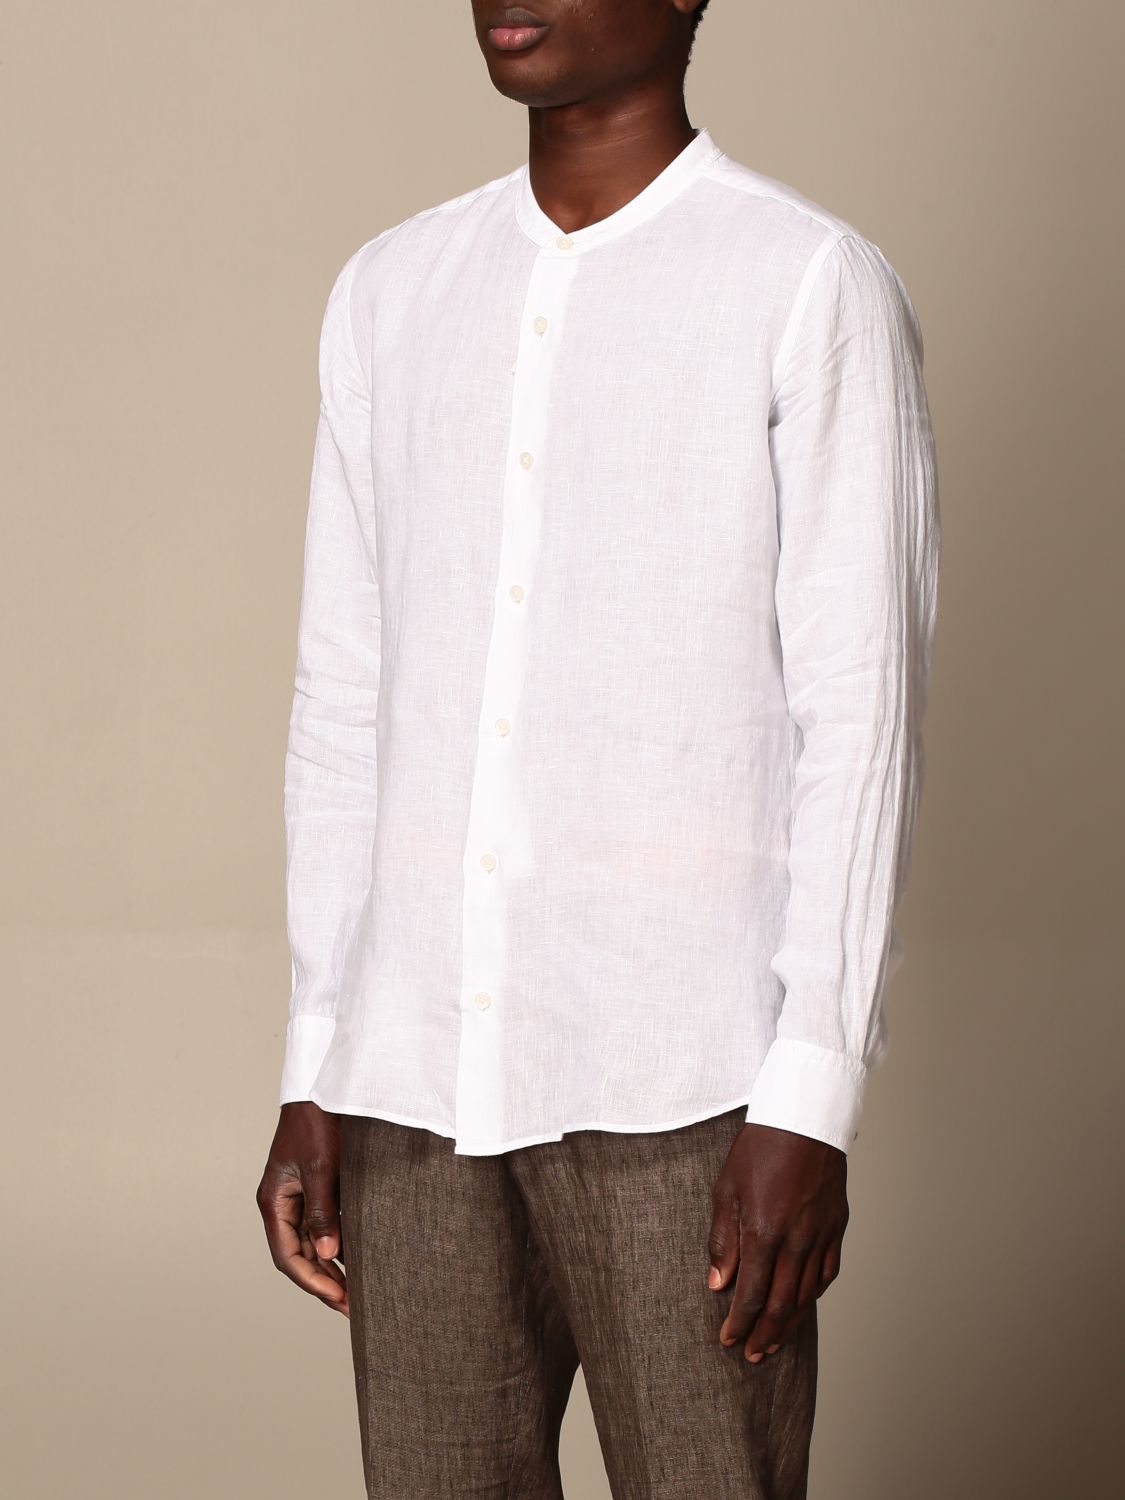 Shirt Z Zegna: Z Zegna shirt in washed linen with mandarin collar white 4